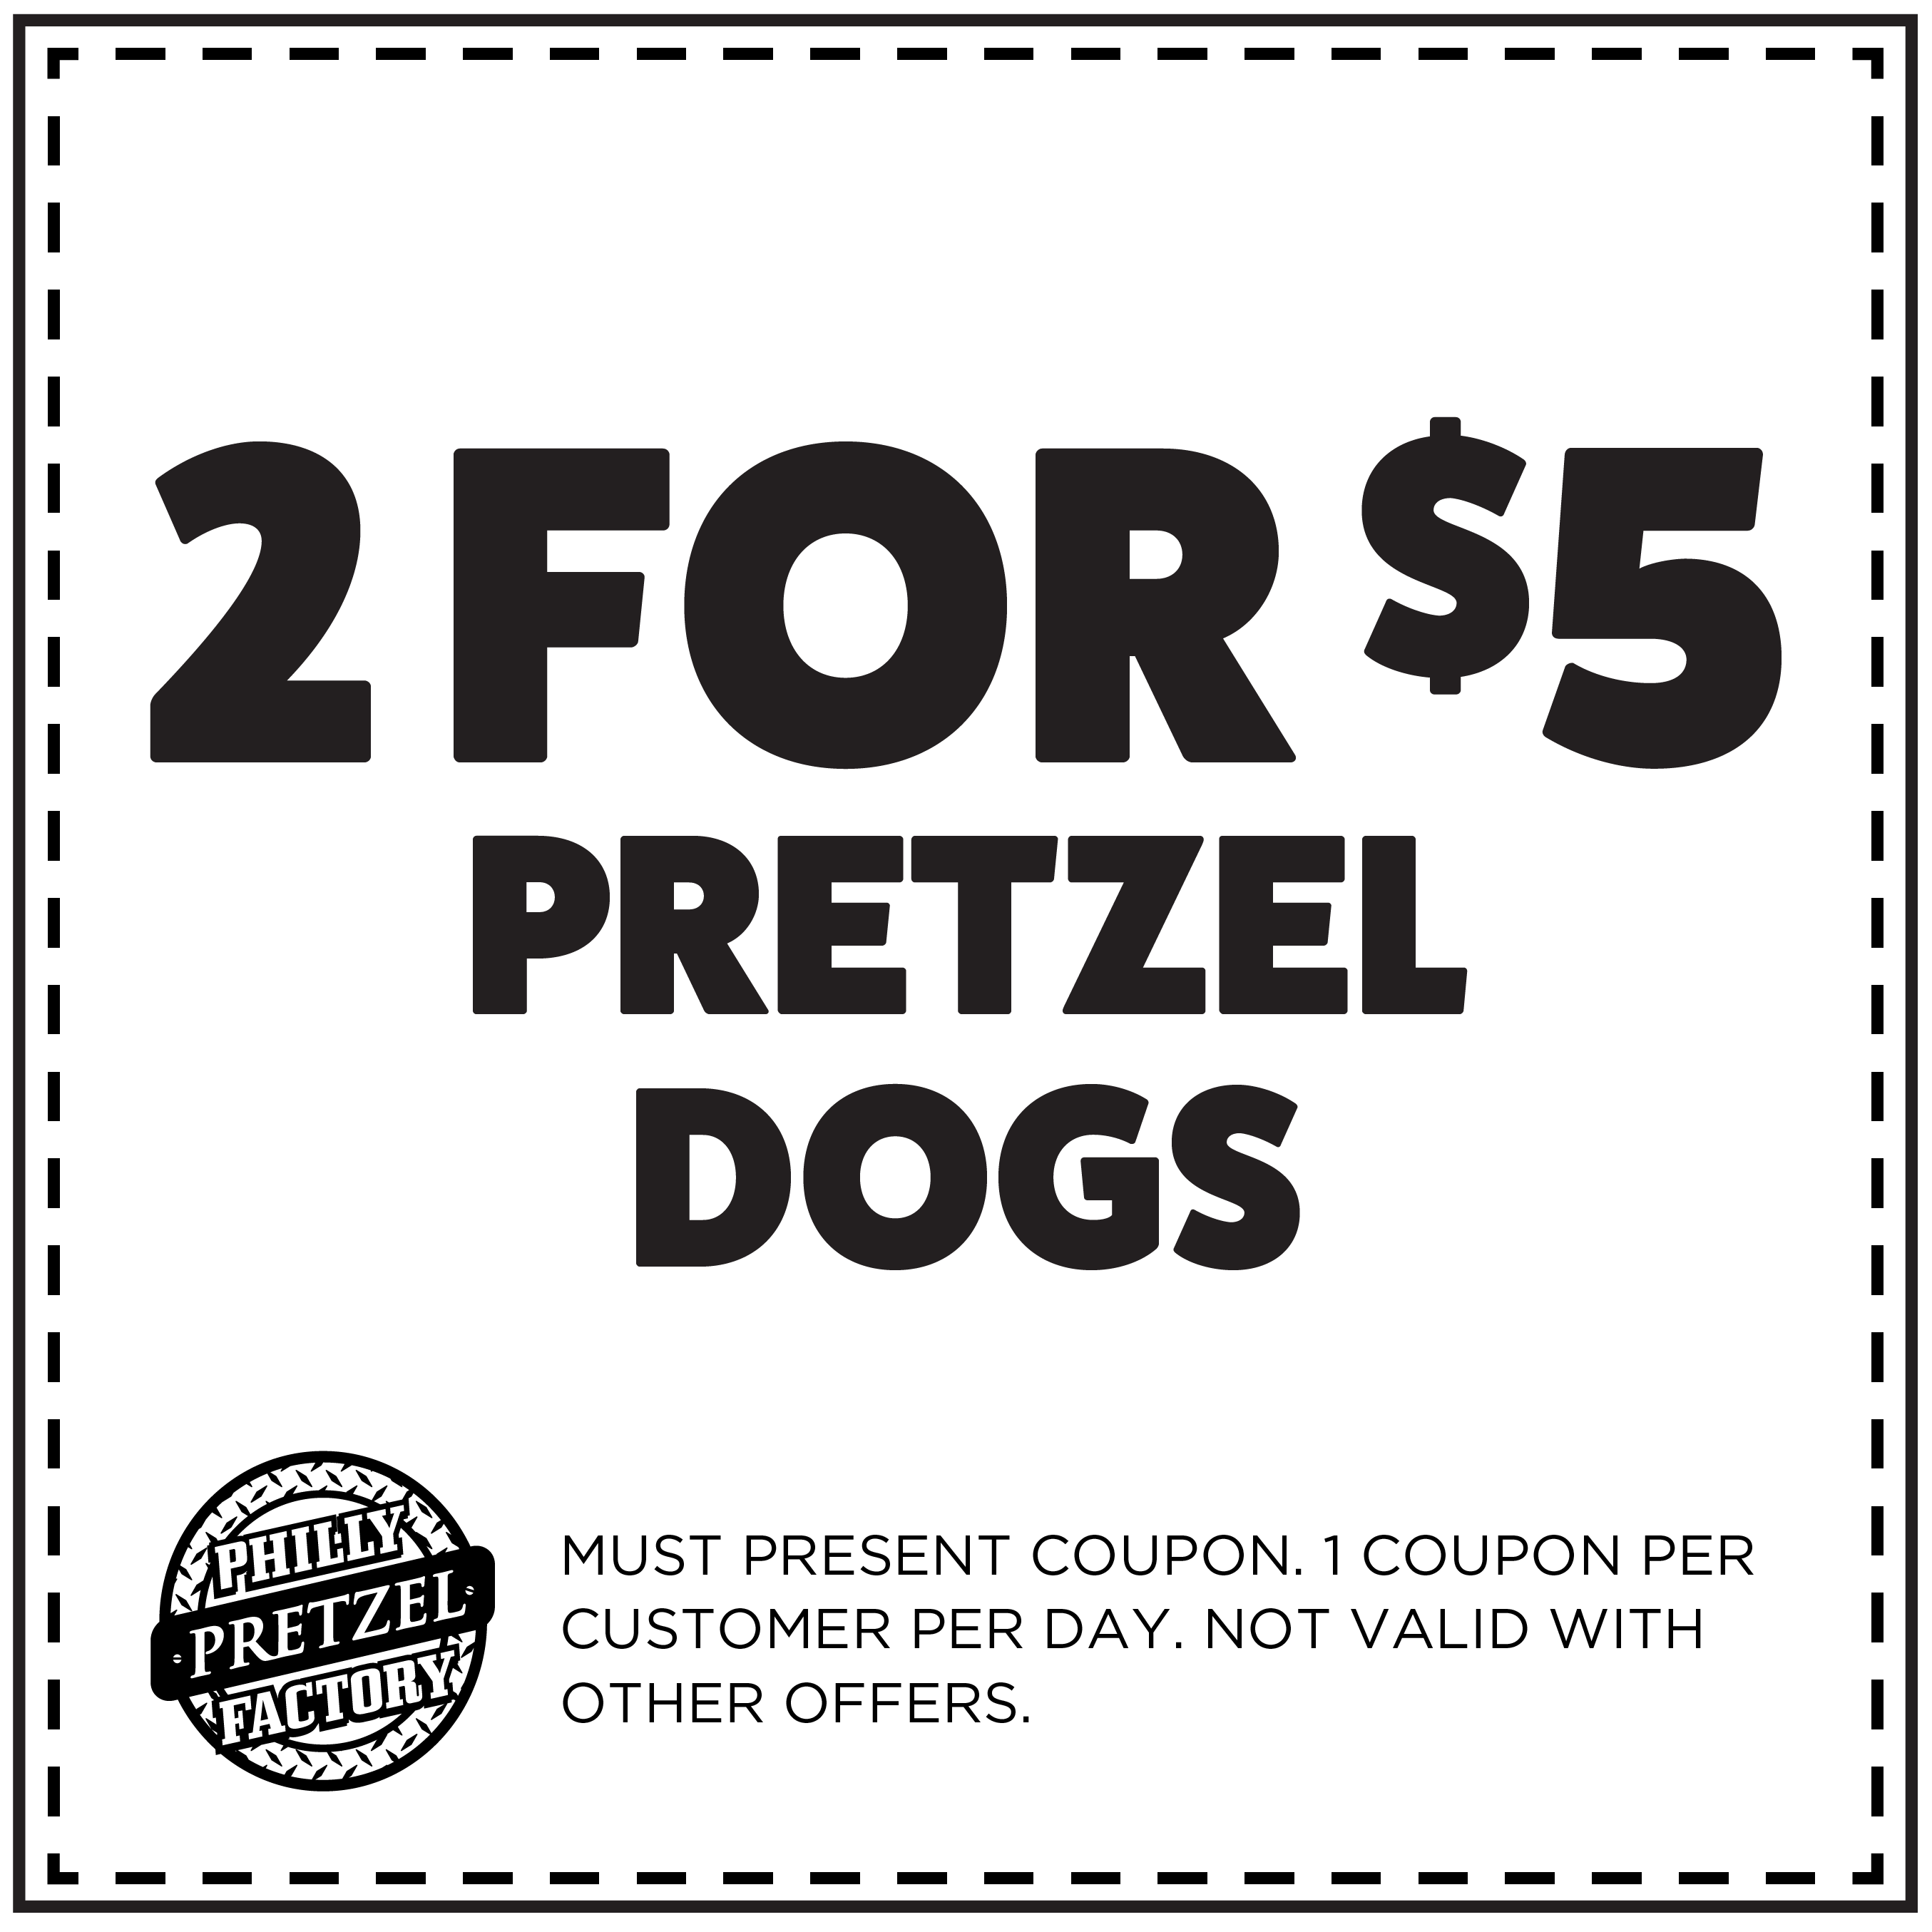 2 for $5 Pretzel Dogs